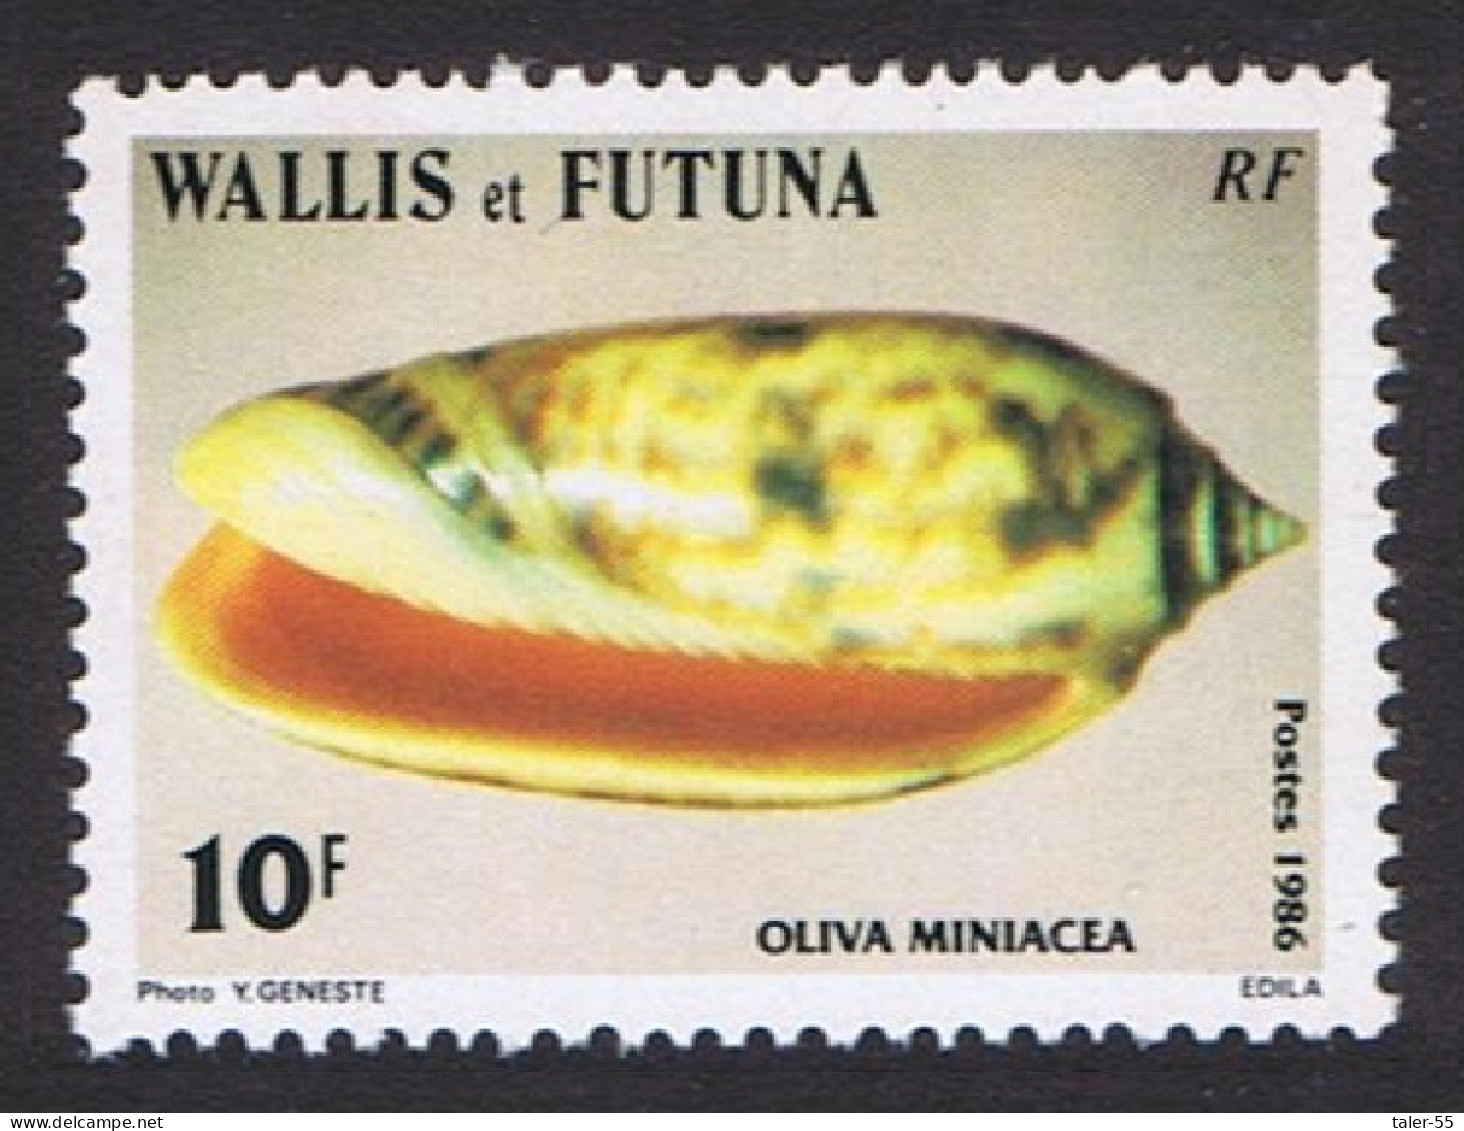 Wallis And Futuna Sea Shells 10f 'Oliva Miniacea' 1986 MNH SG#483 Sc#335 - Unused Stamps